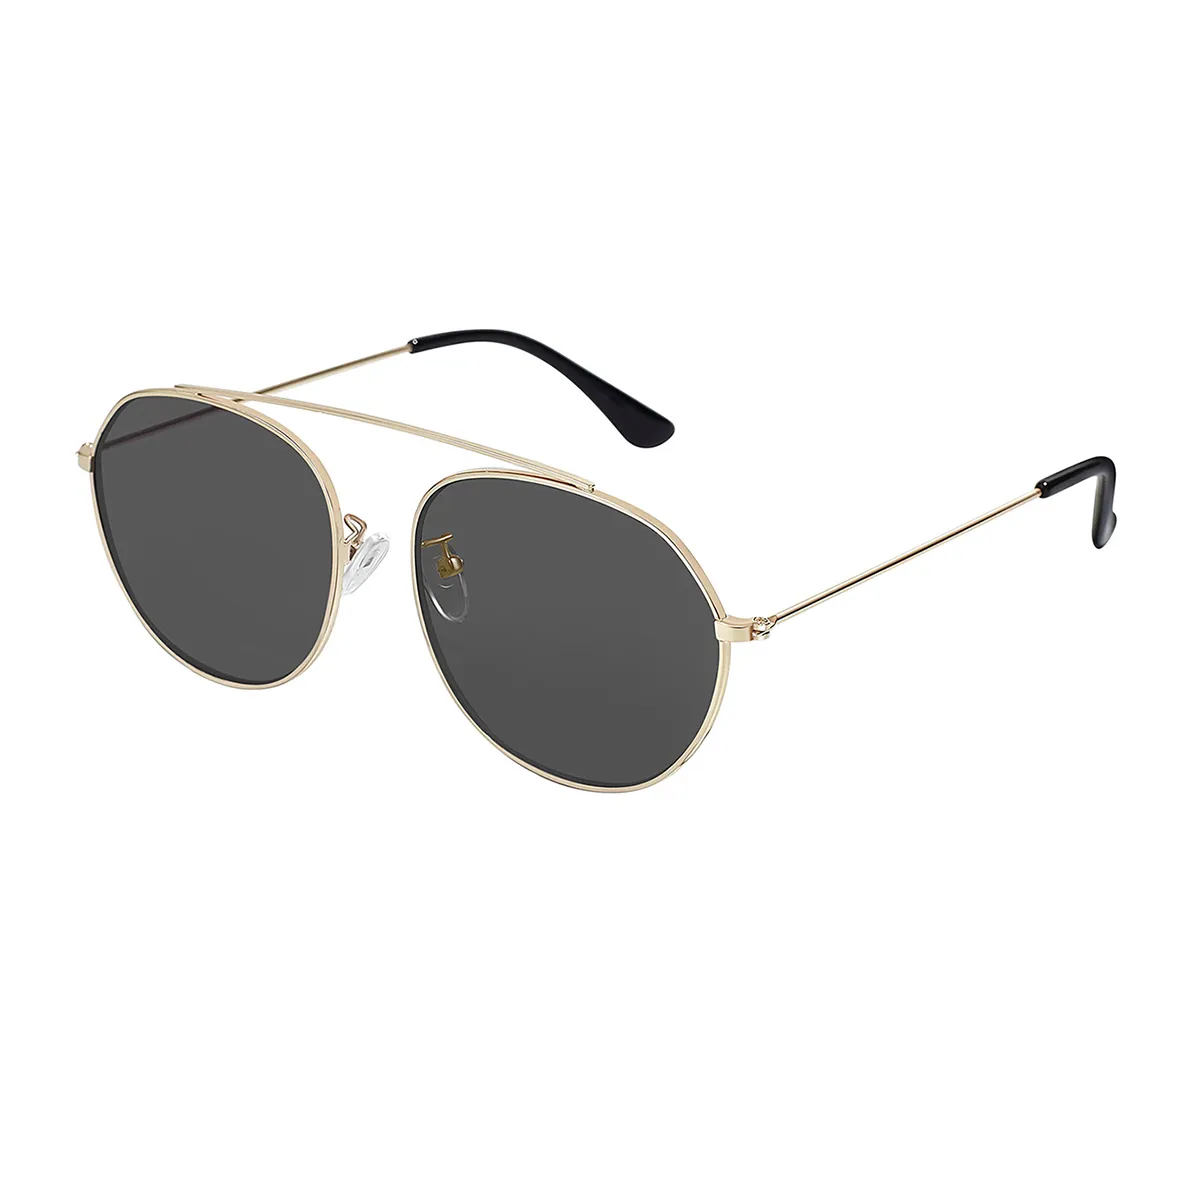 Belmar - Aviator Gold Sunglasses for Men & Women